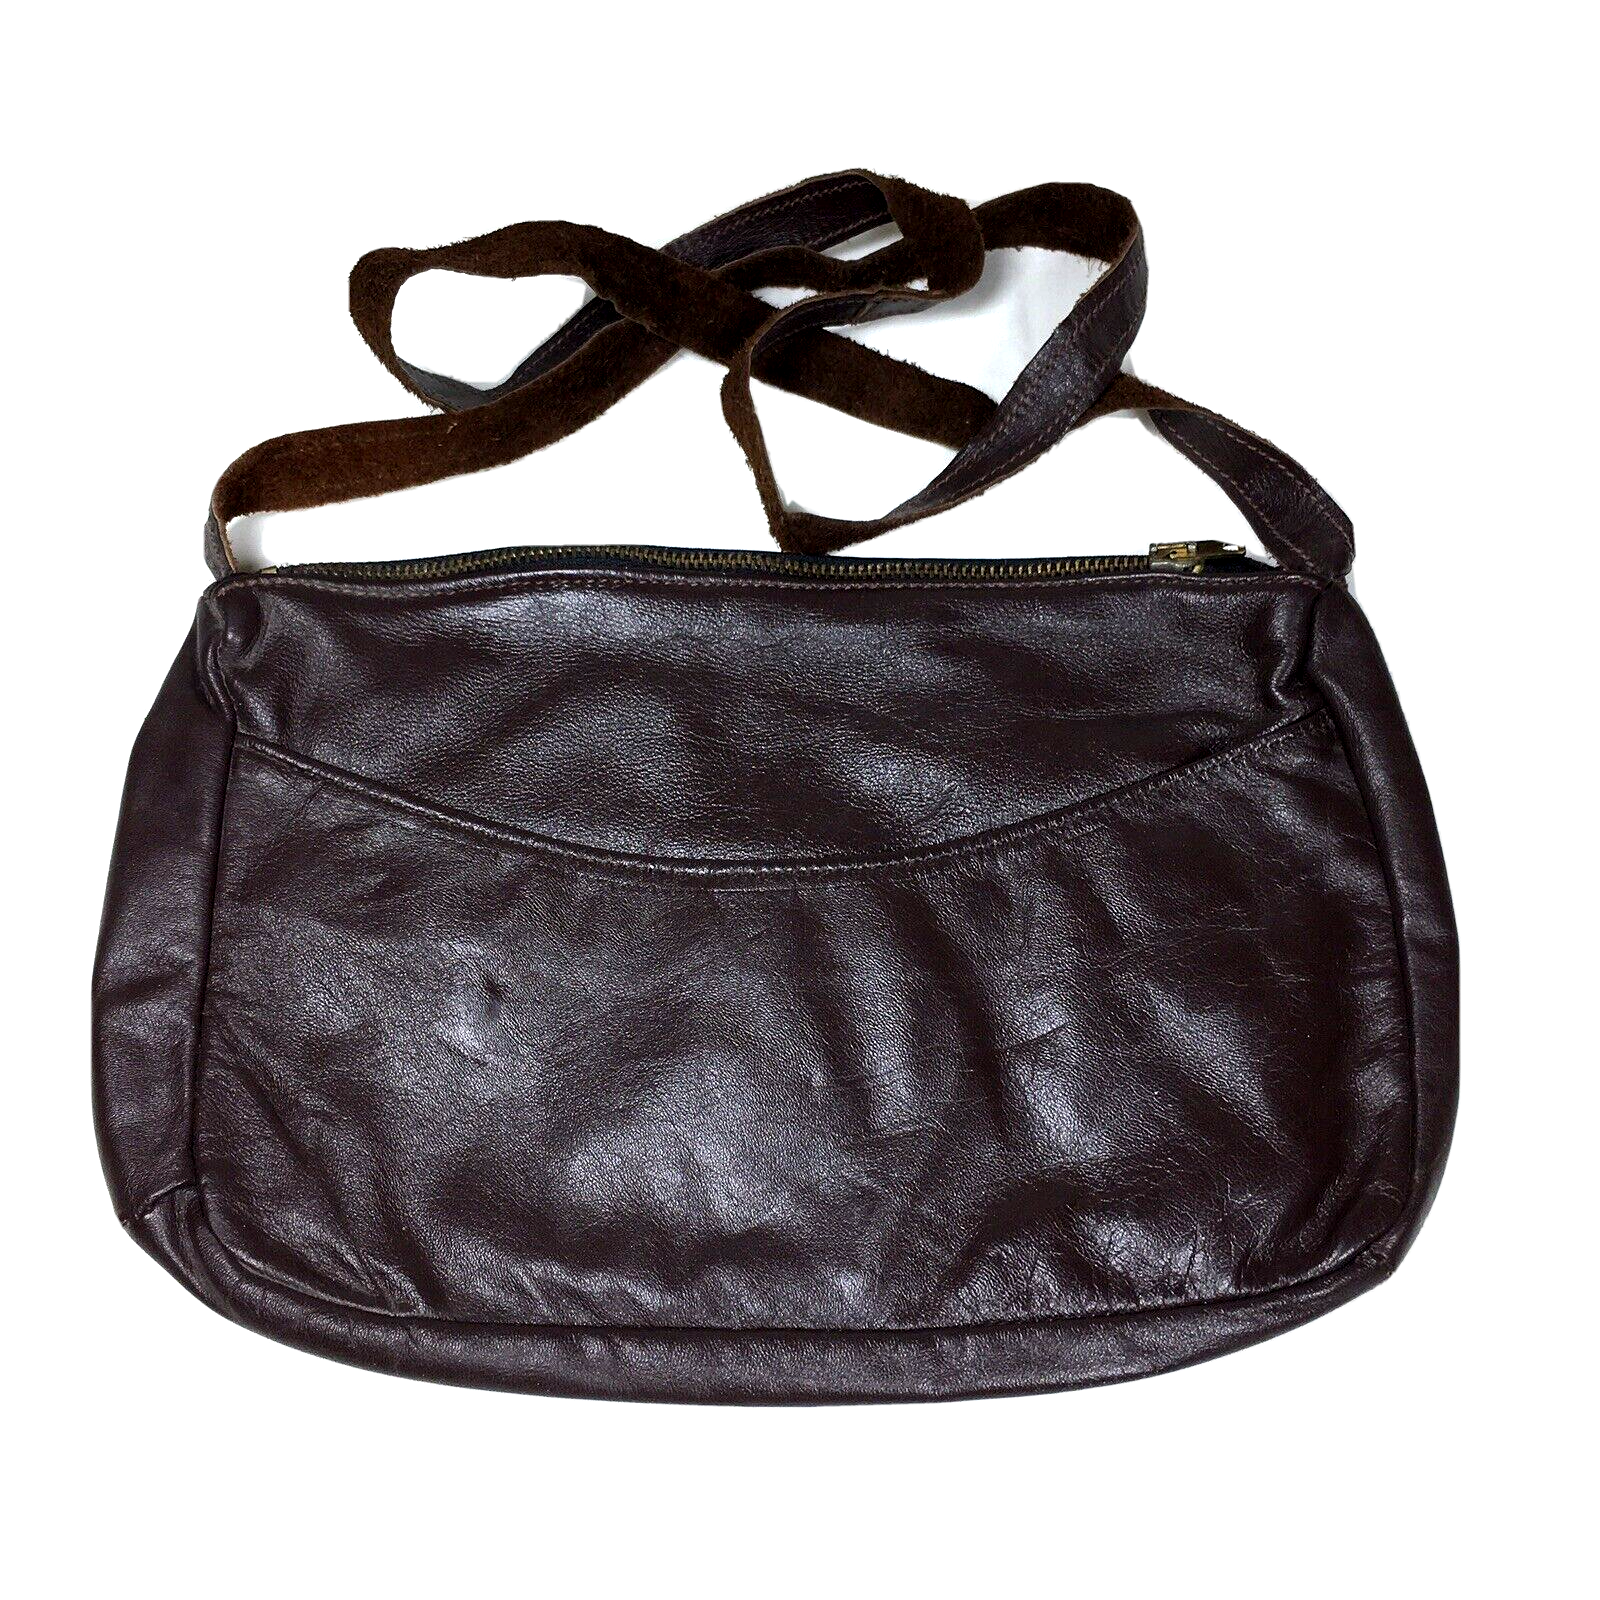 Primary image for Vintage 70s Leather Crossbody Handbag Brown Pouch Purse Shoulder Bag Unlined